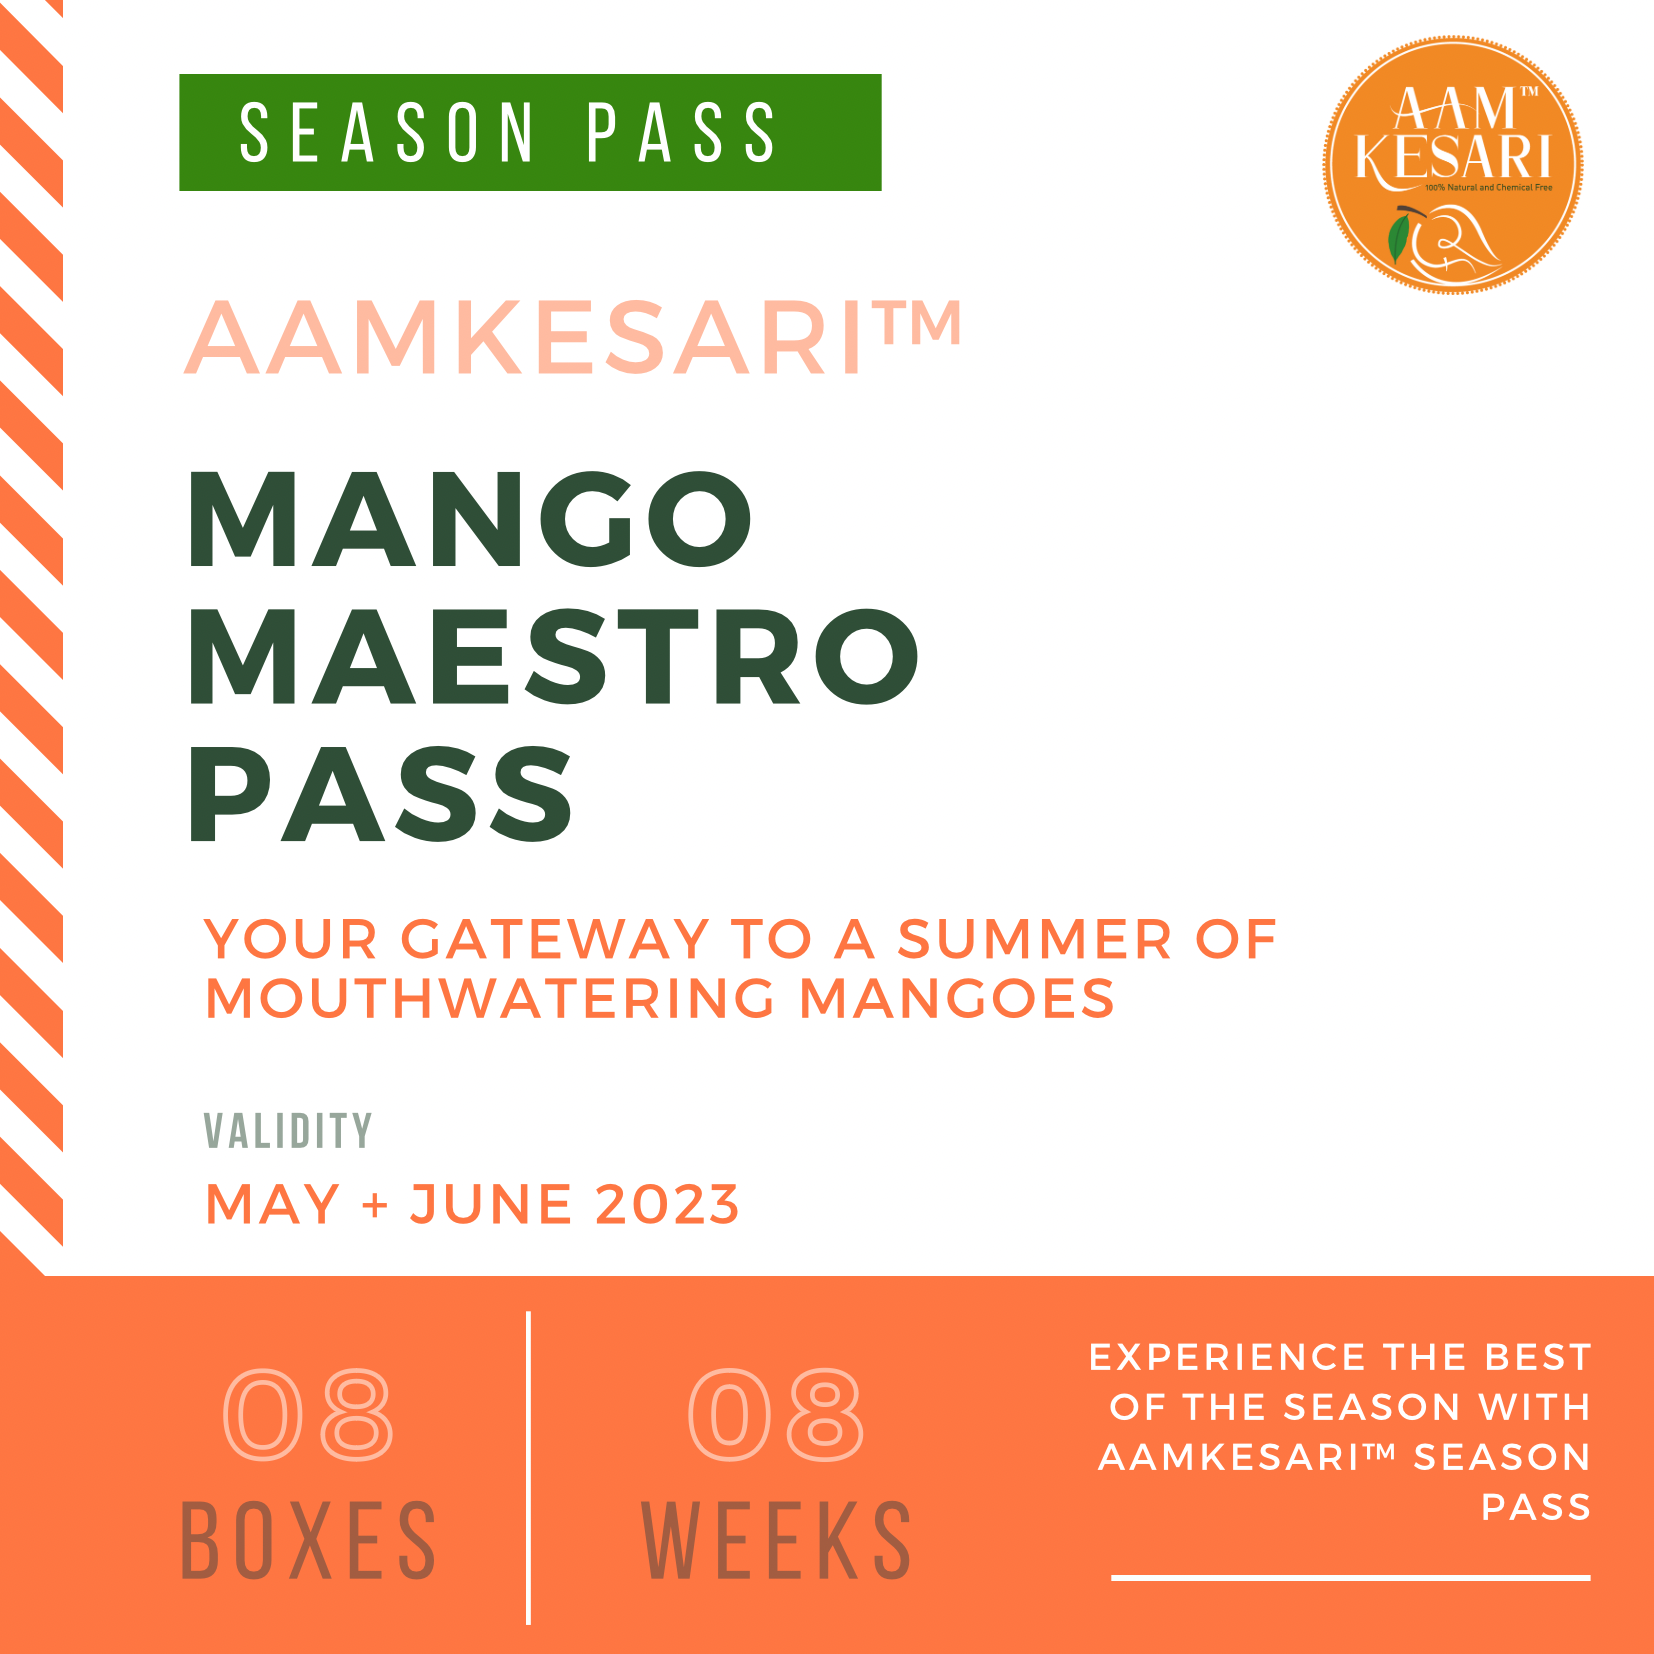 Mango Maestro Pass - 08 Box